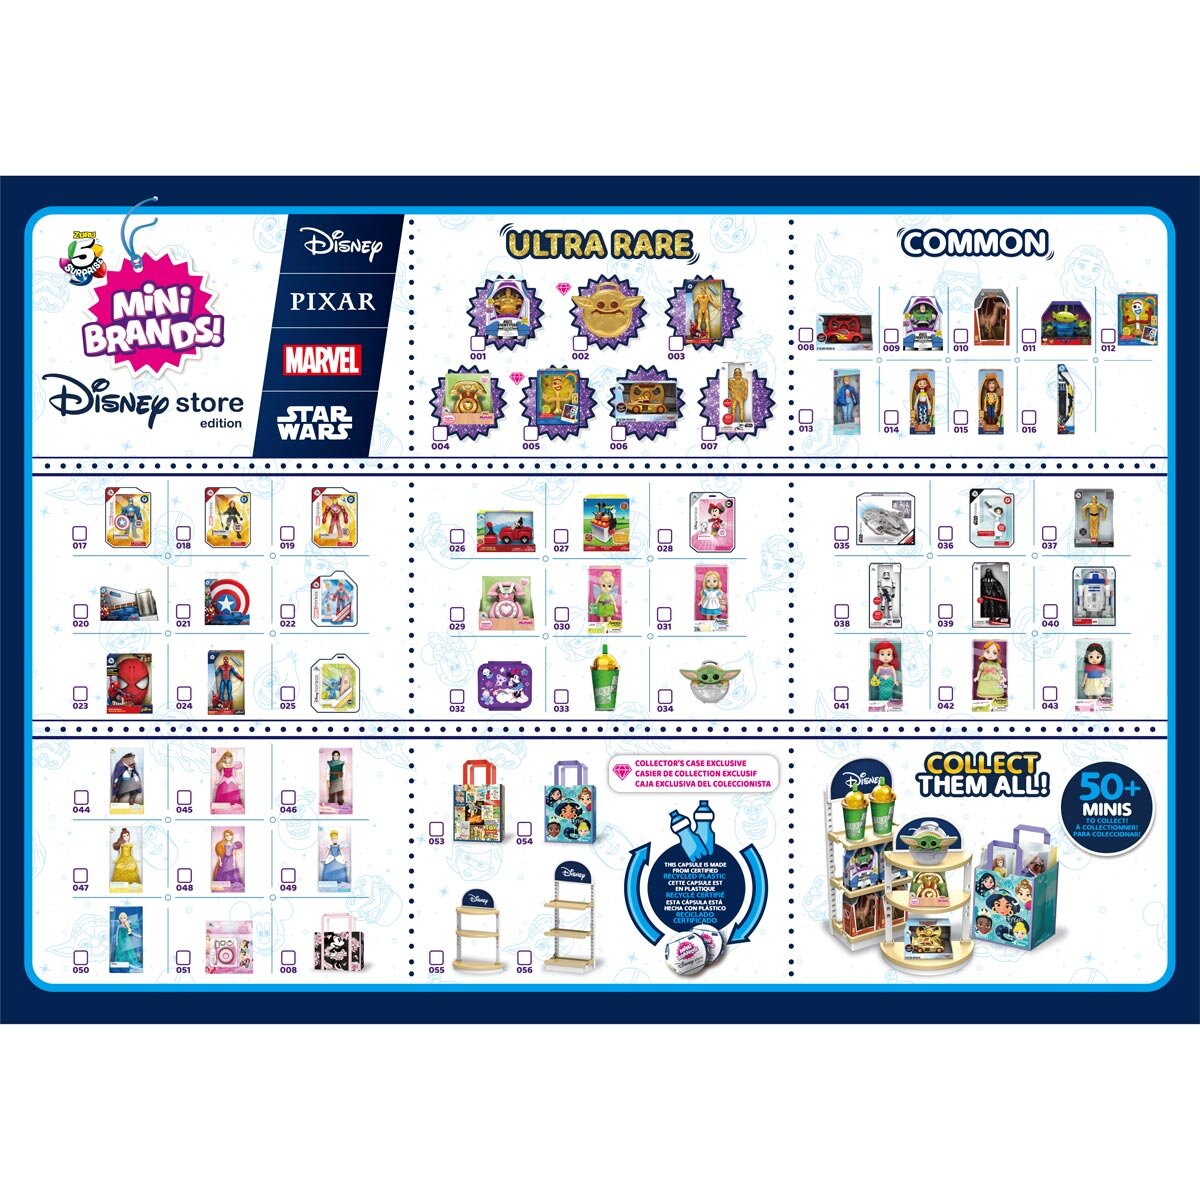 Buy Disney Mini Brands 8 Pack Cover Image at Costco.co.uk